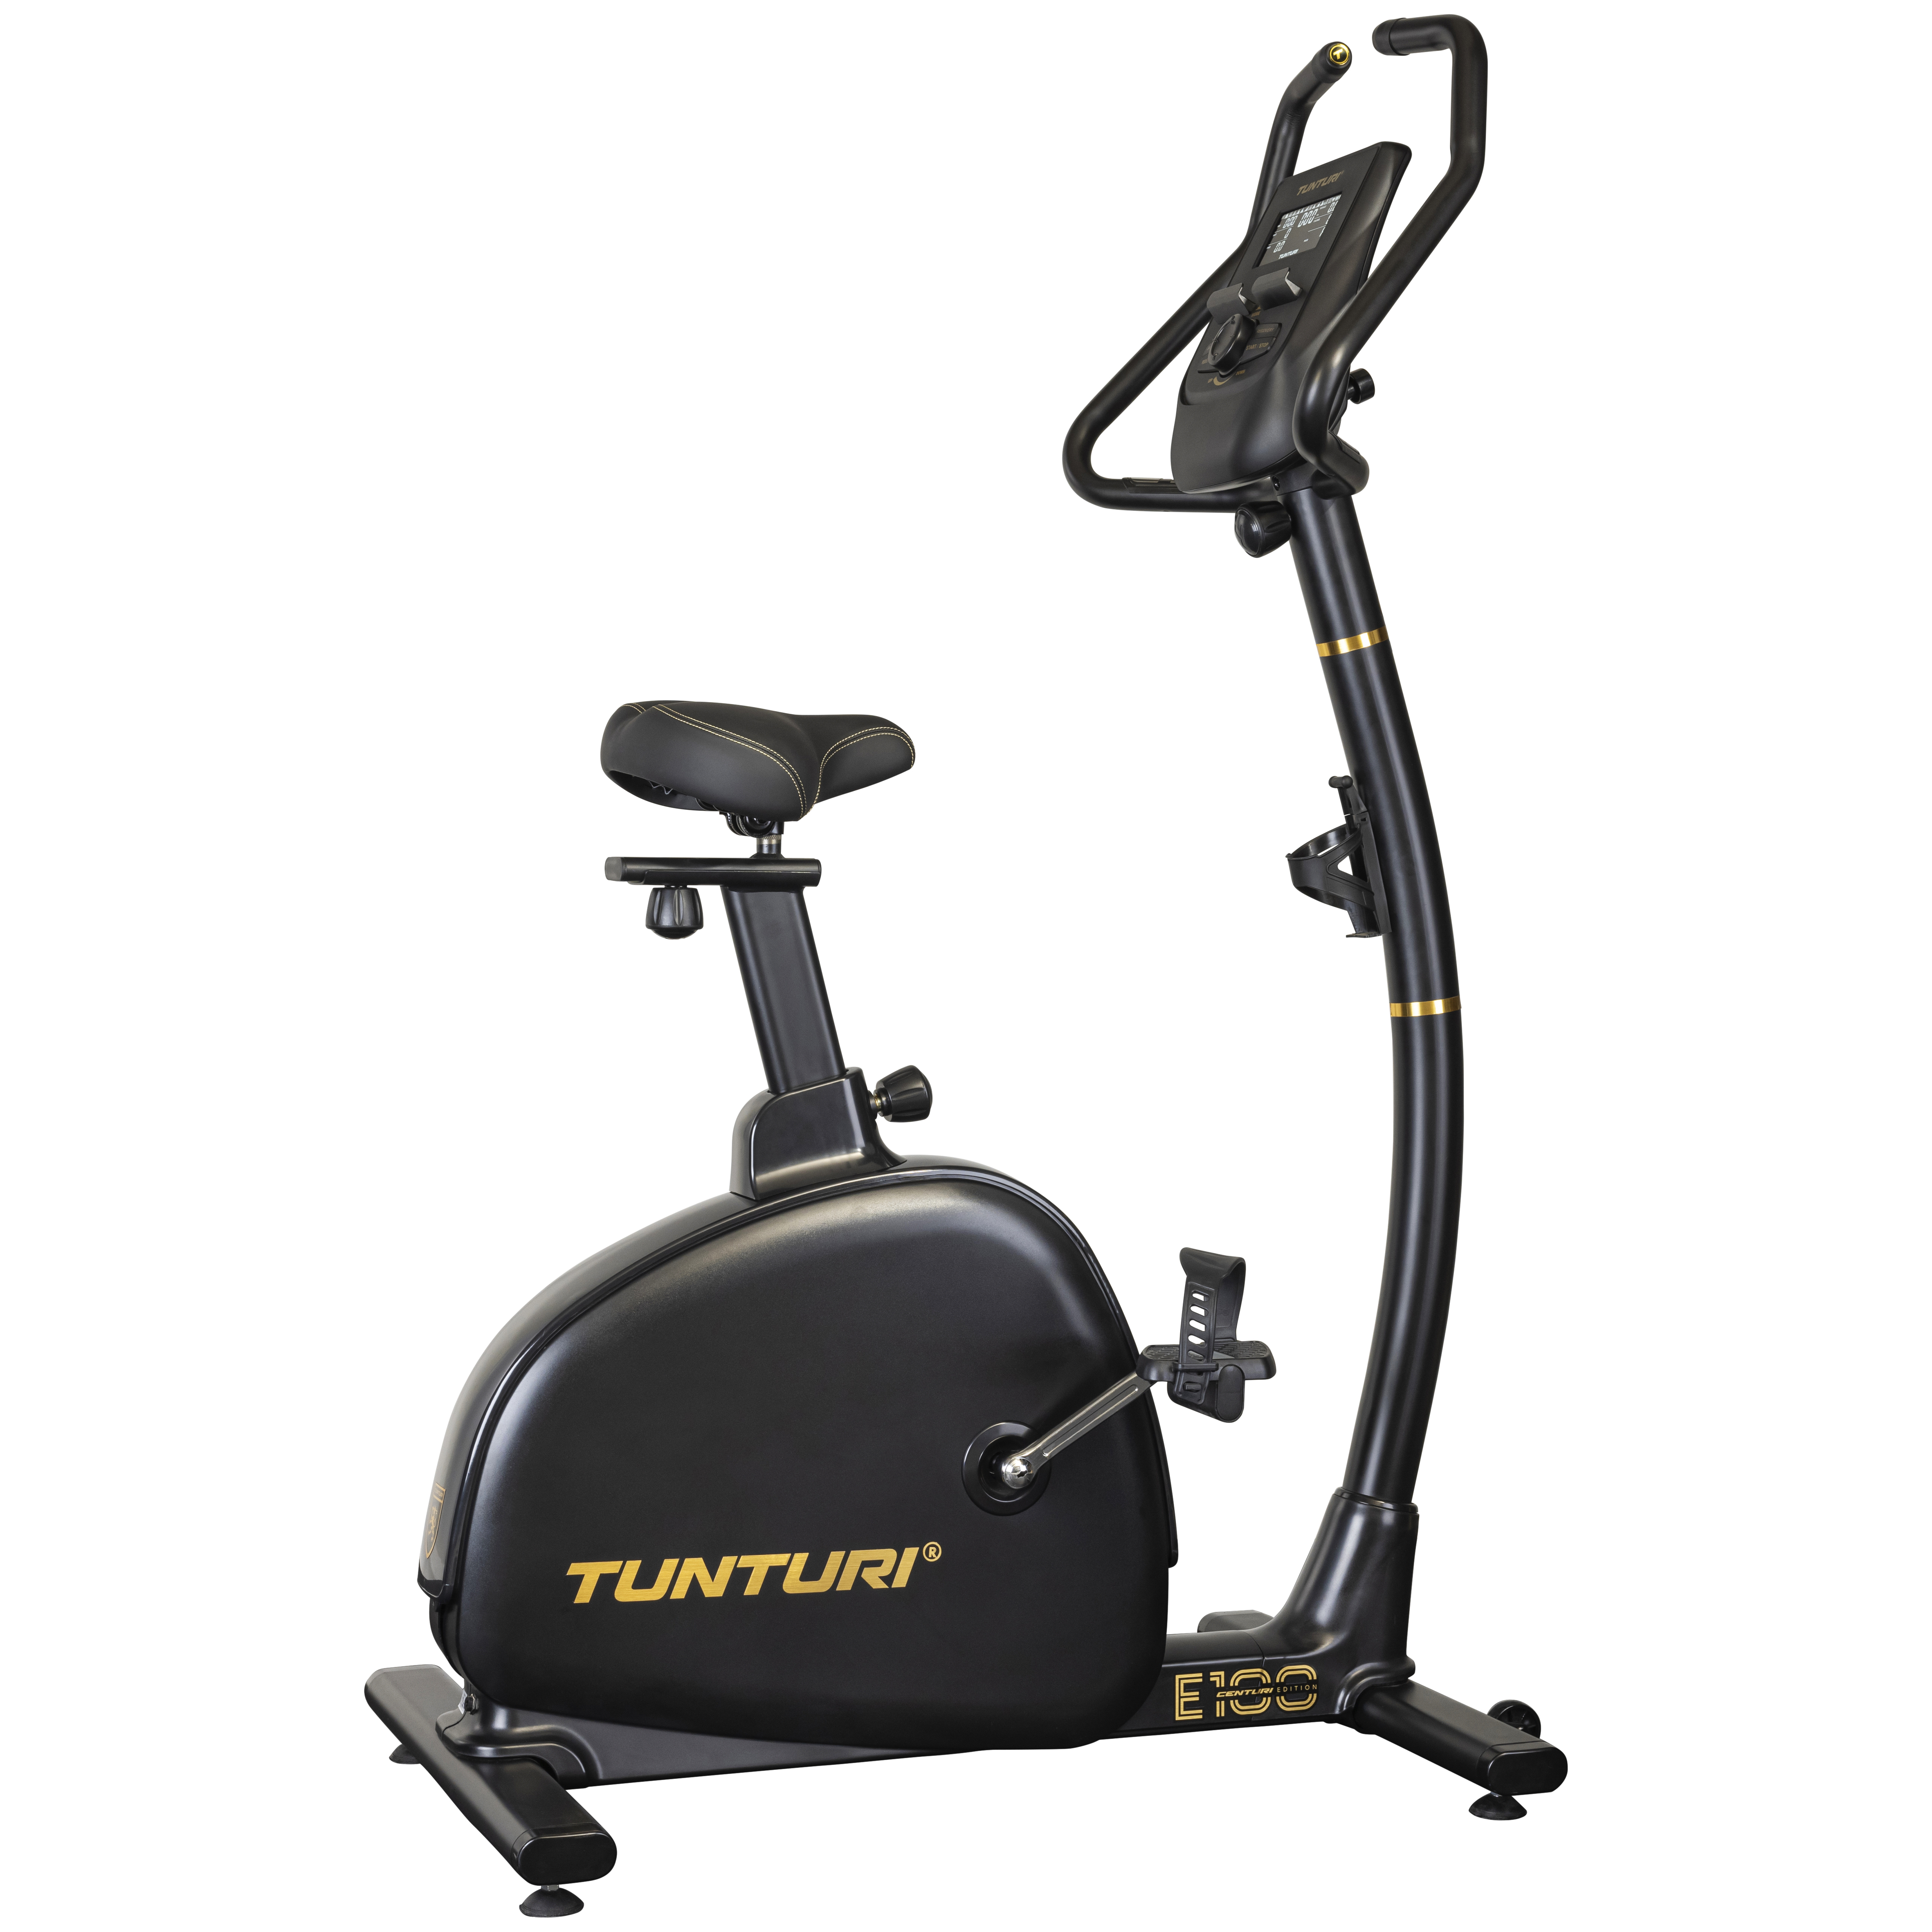 Tunturi Centuri Performance E100 Hometrainer - Fitness Fiets - Ergometer